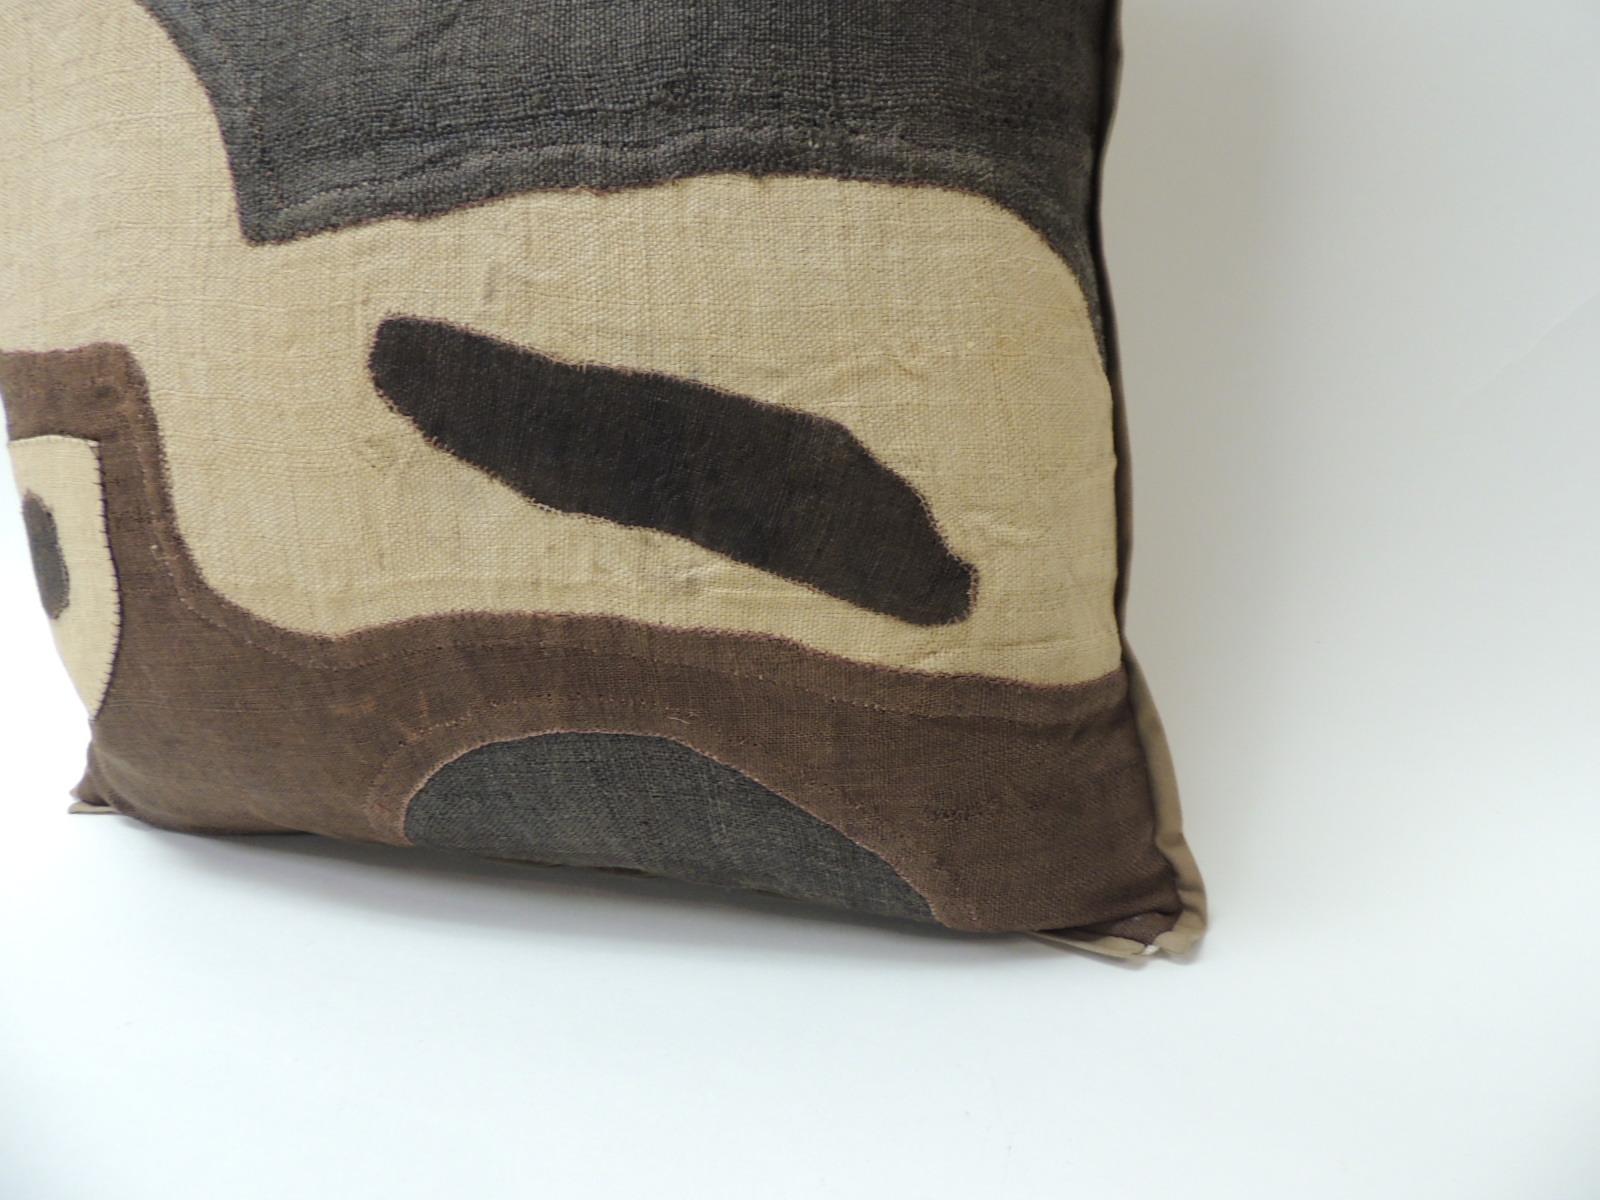 Tribal Applique Raffia Brown and Black Kuba Decorative Pillows Matisse Style